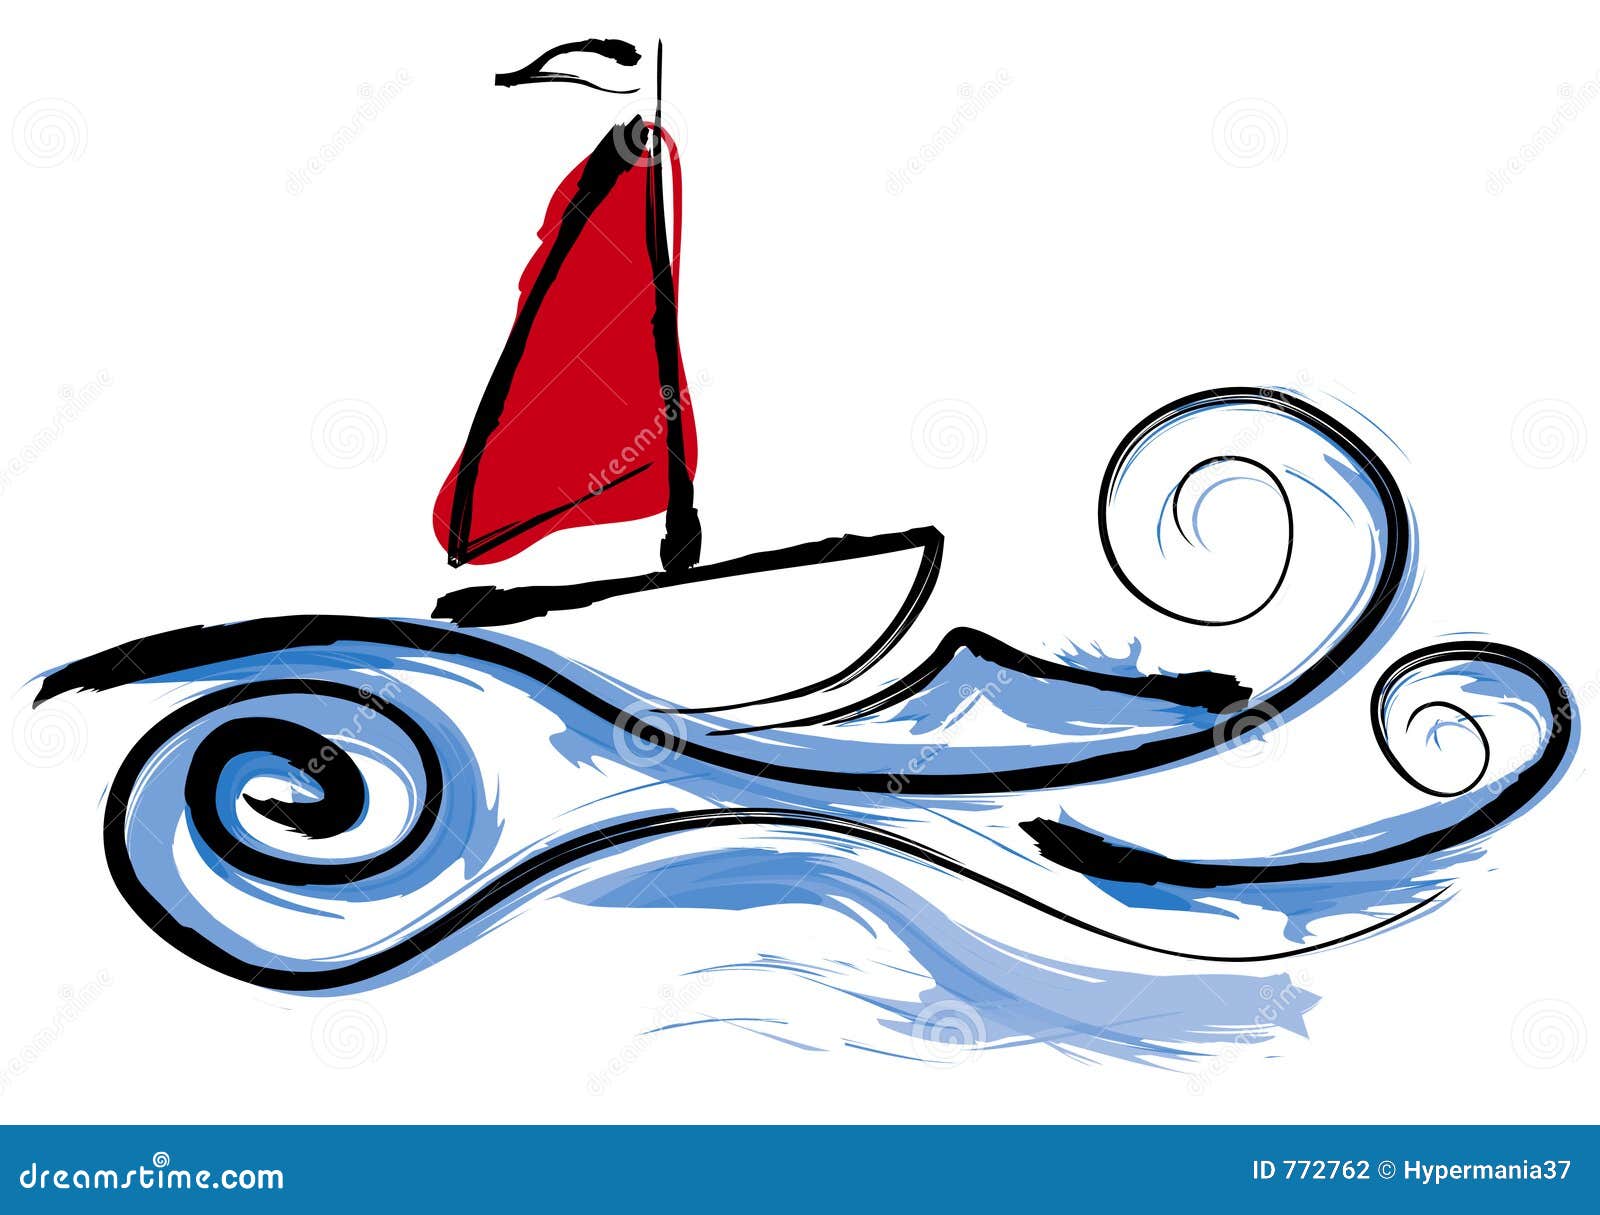 boat illustrations clipart - photo #24